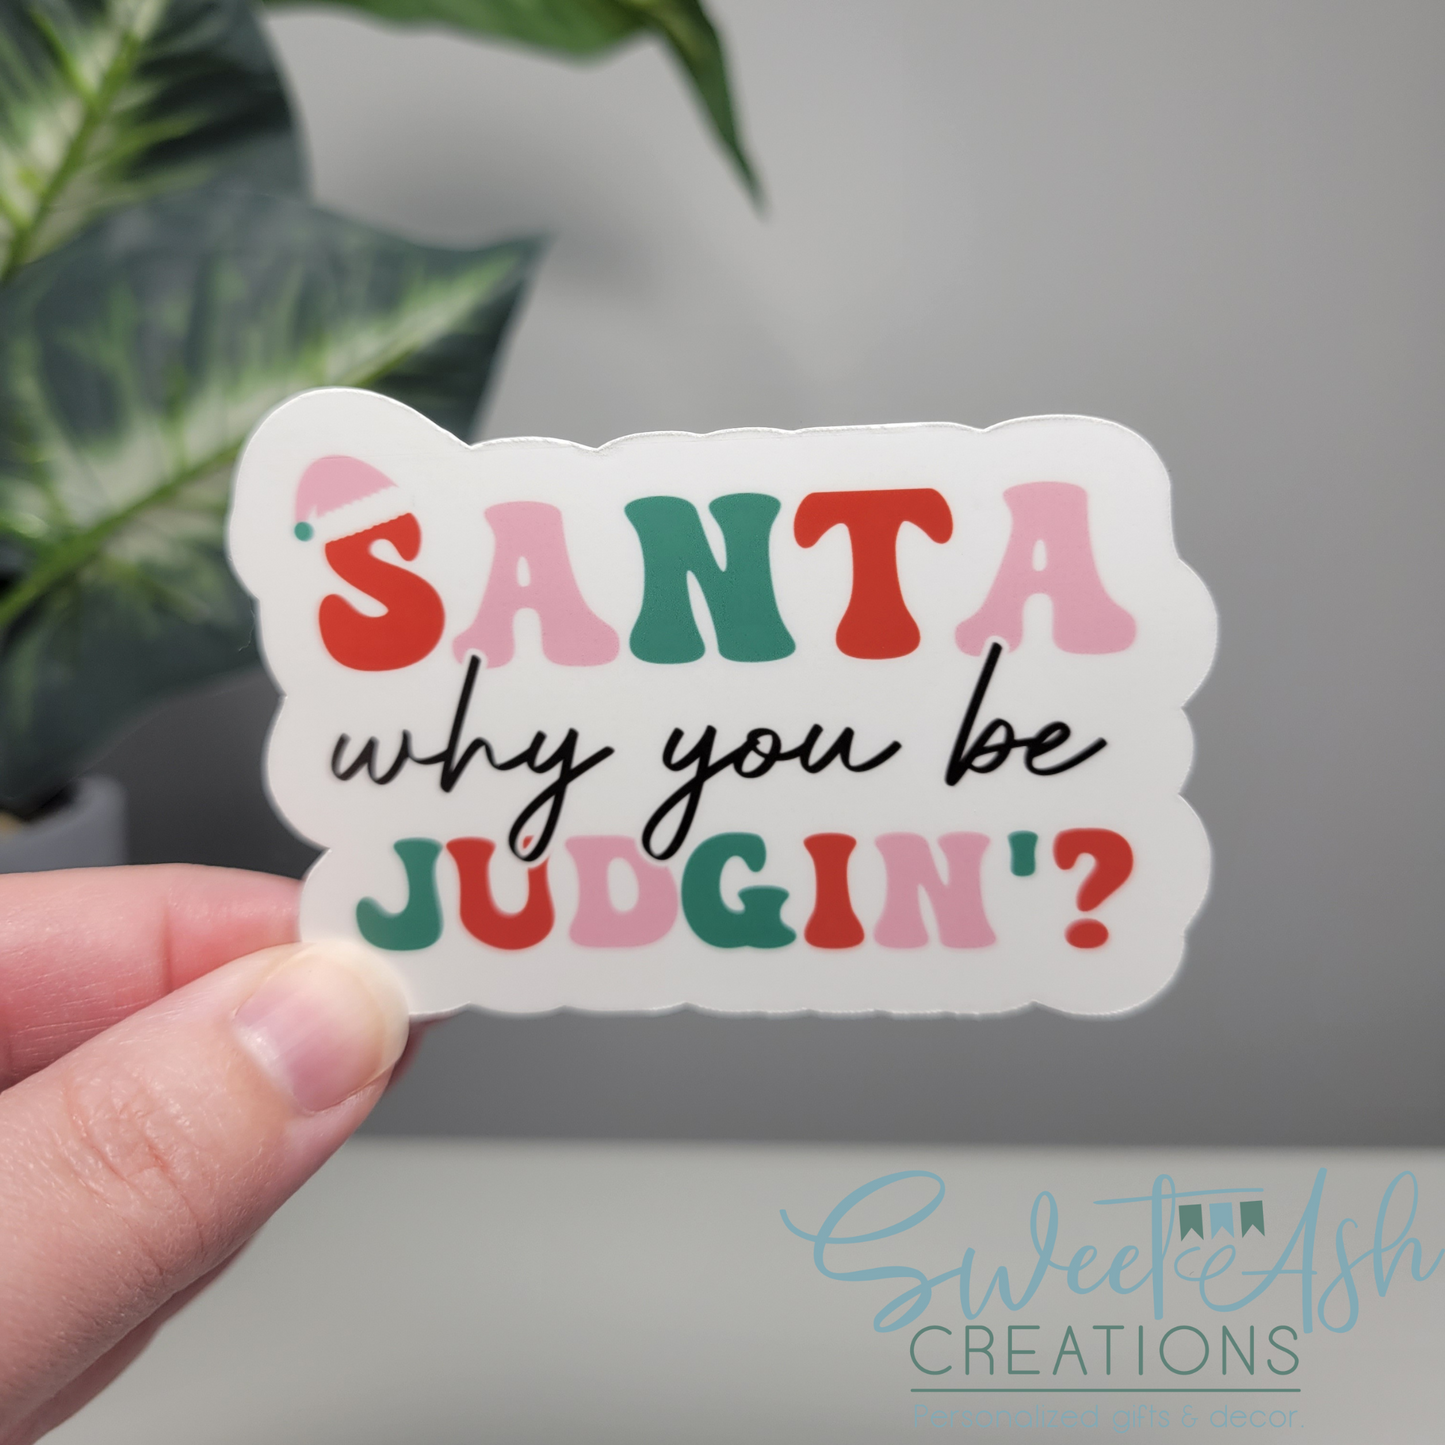 Santa Why You Be Judgin'? Sticker